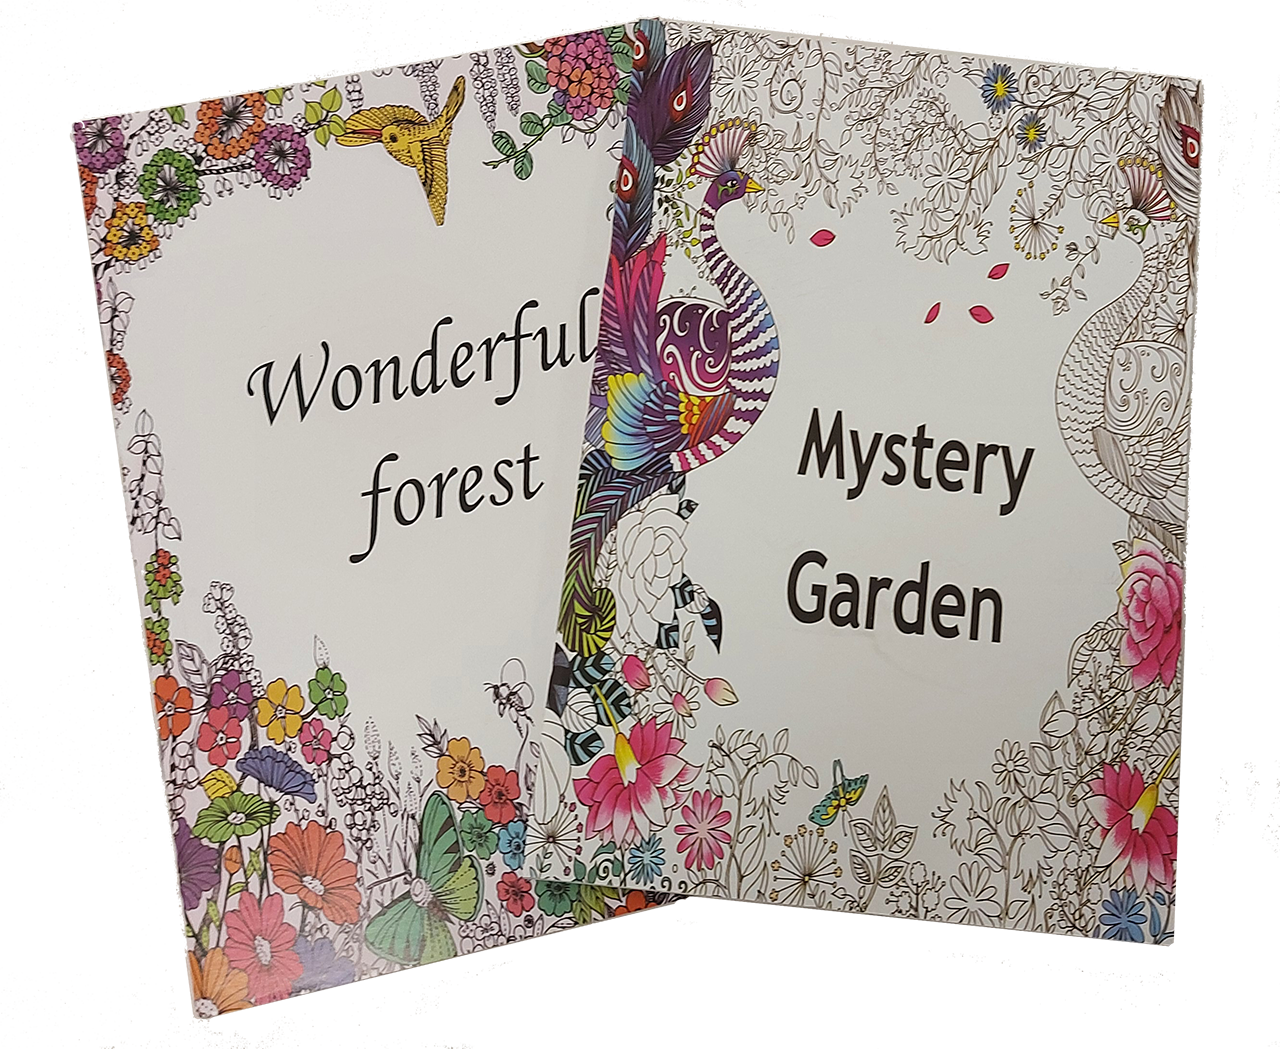 Felnőtt kifestő A5 duo pack Wonderful forest/Mystery garden